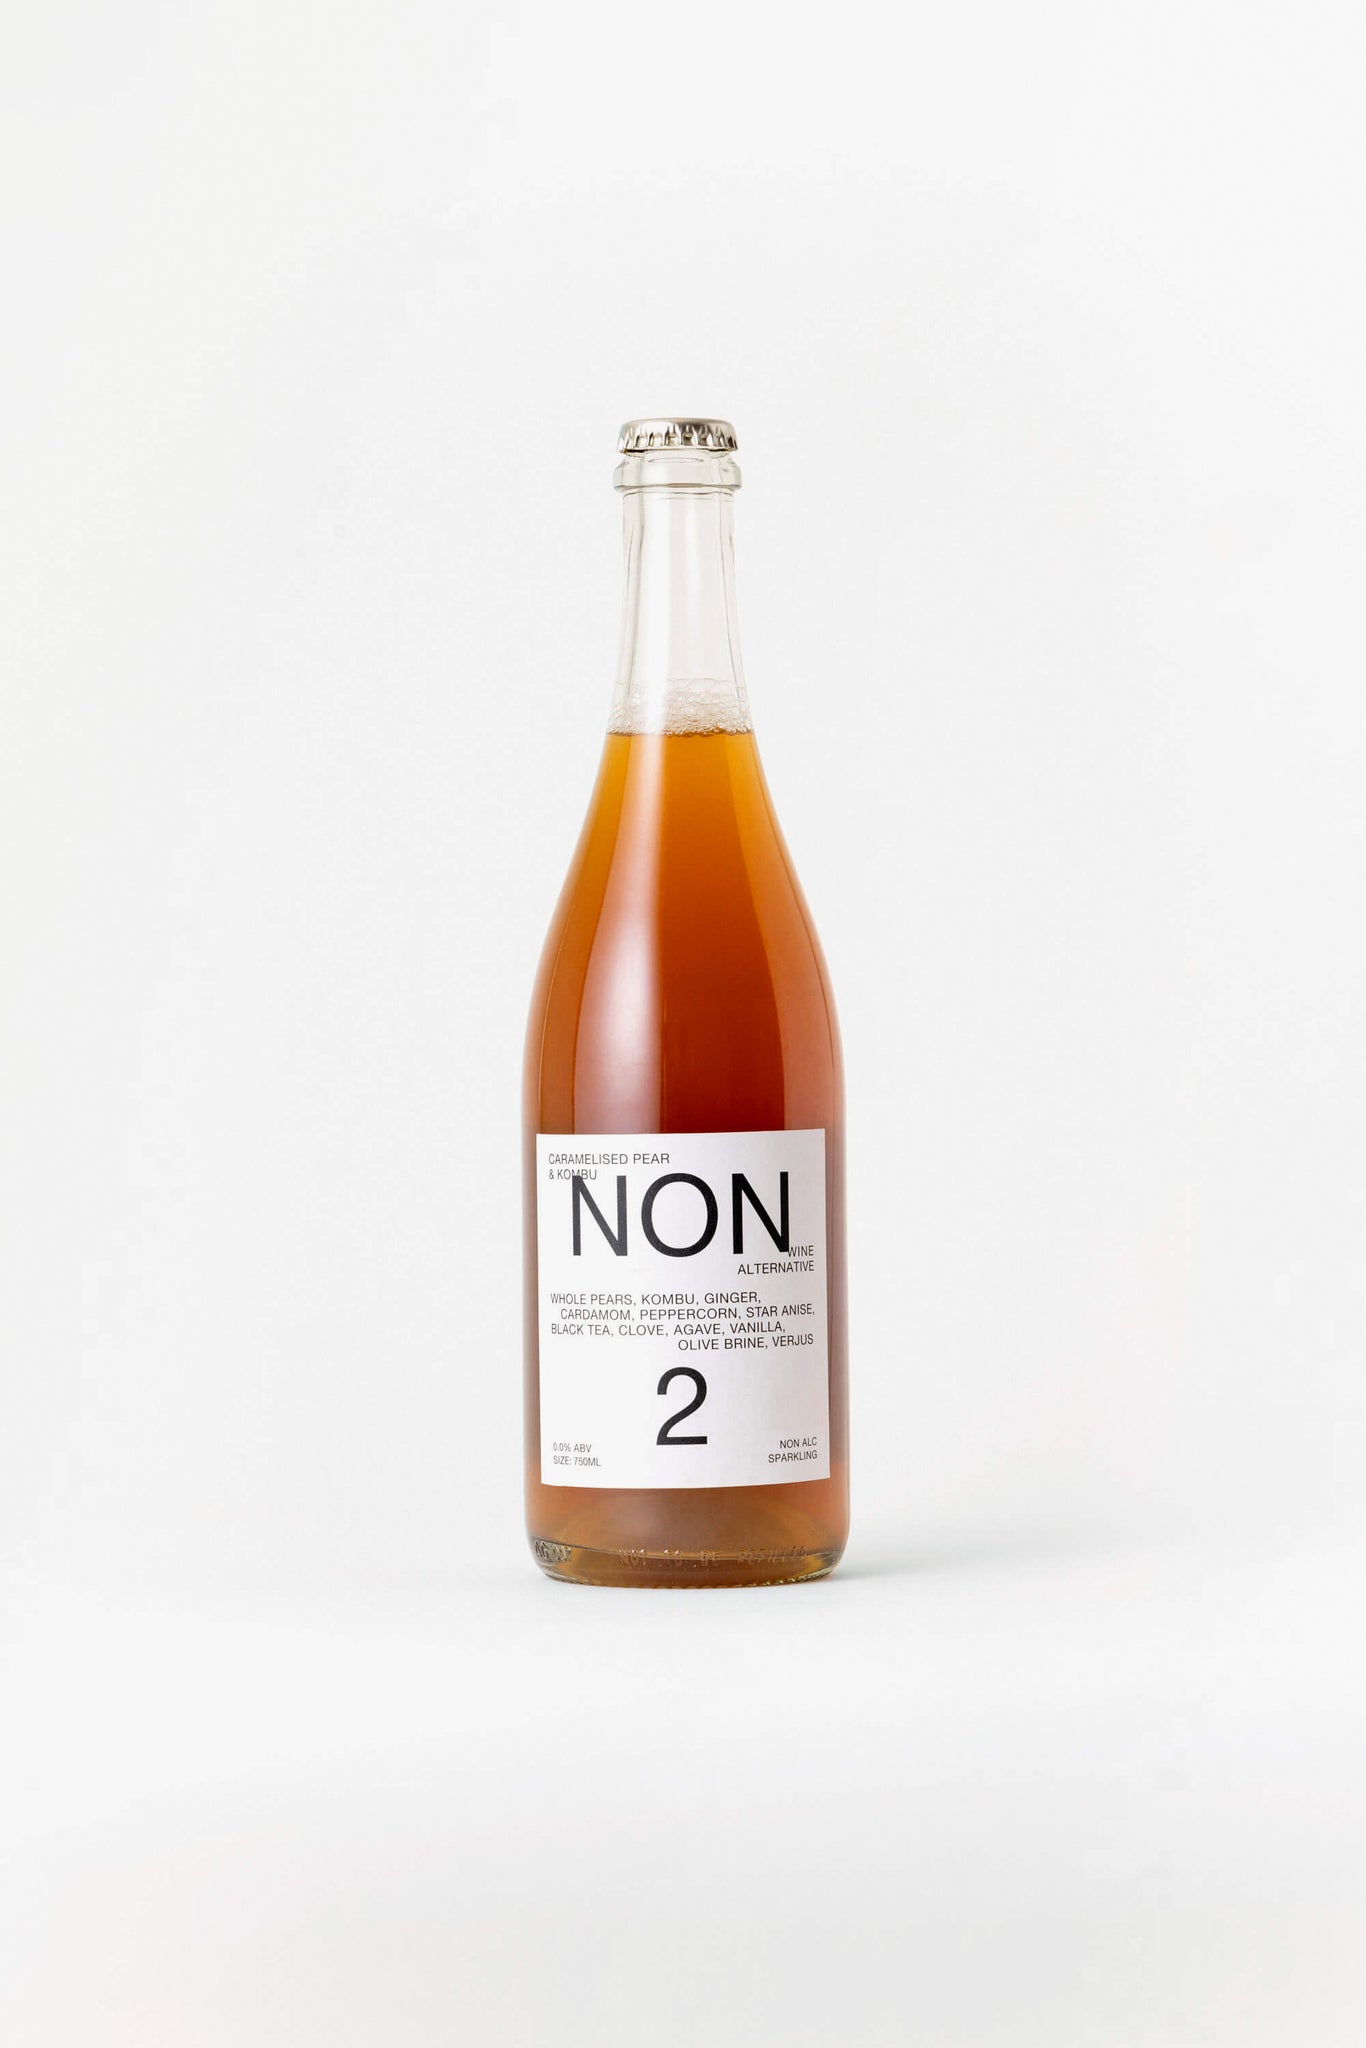 NON2 Caramelised Pear & Kombu Bottle front